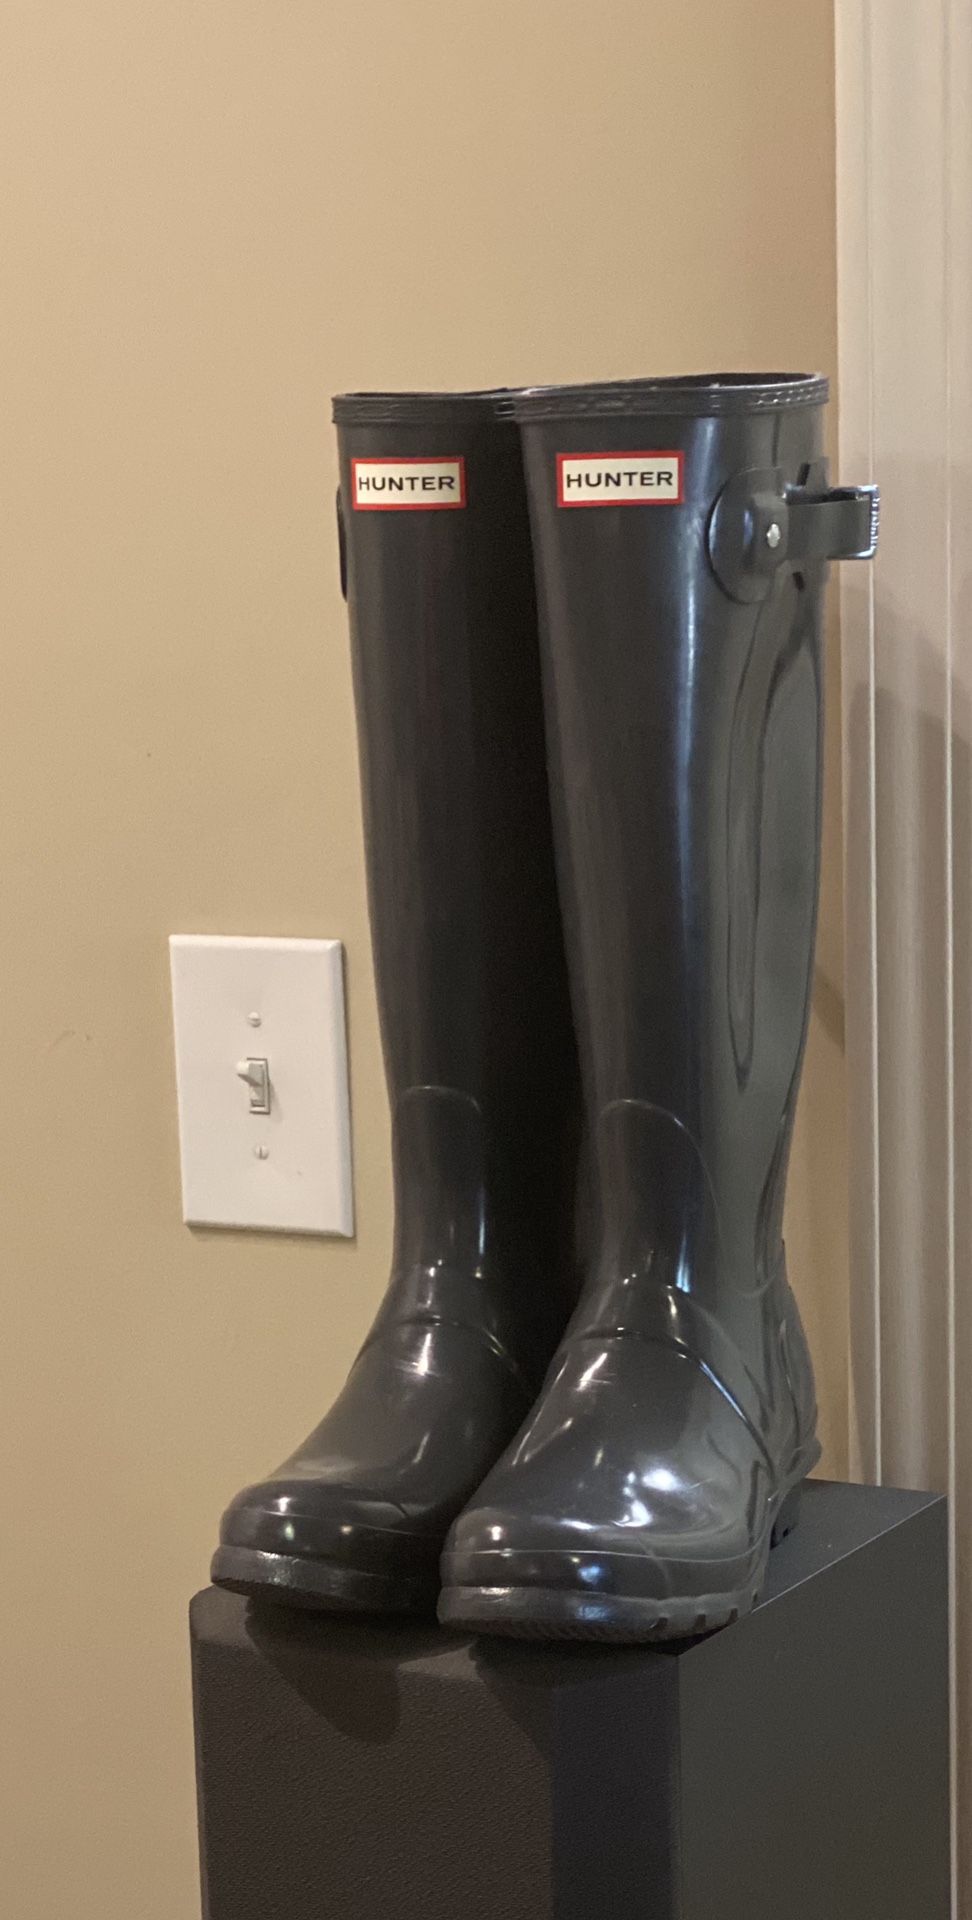 New Hunter Rain boots